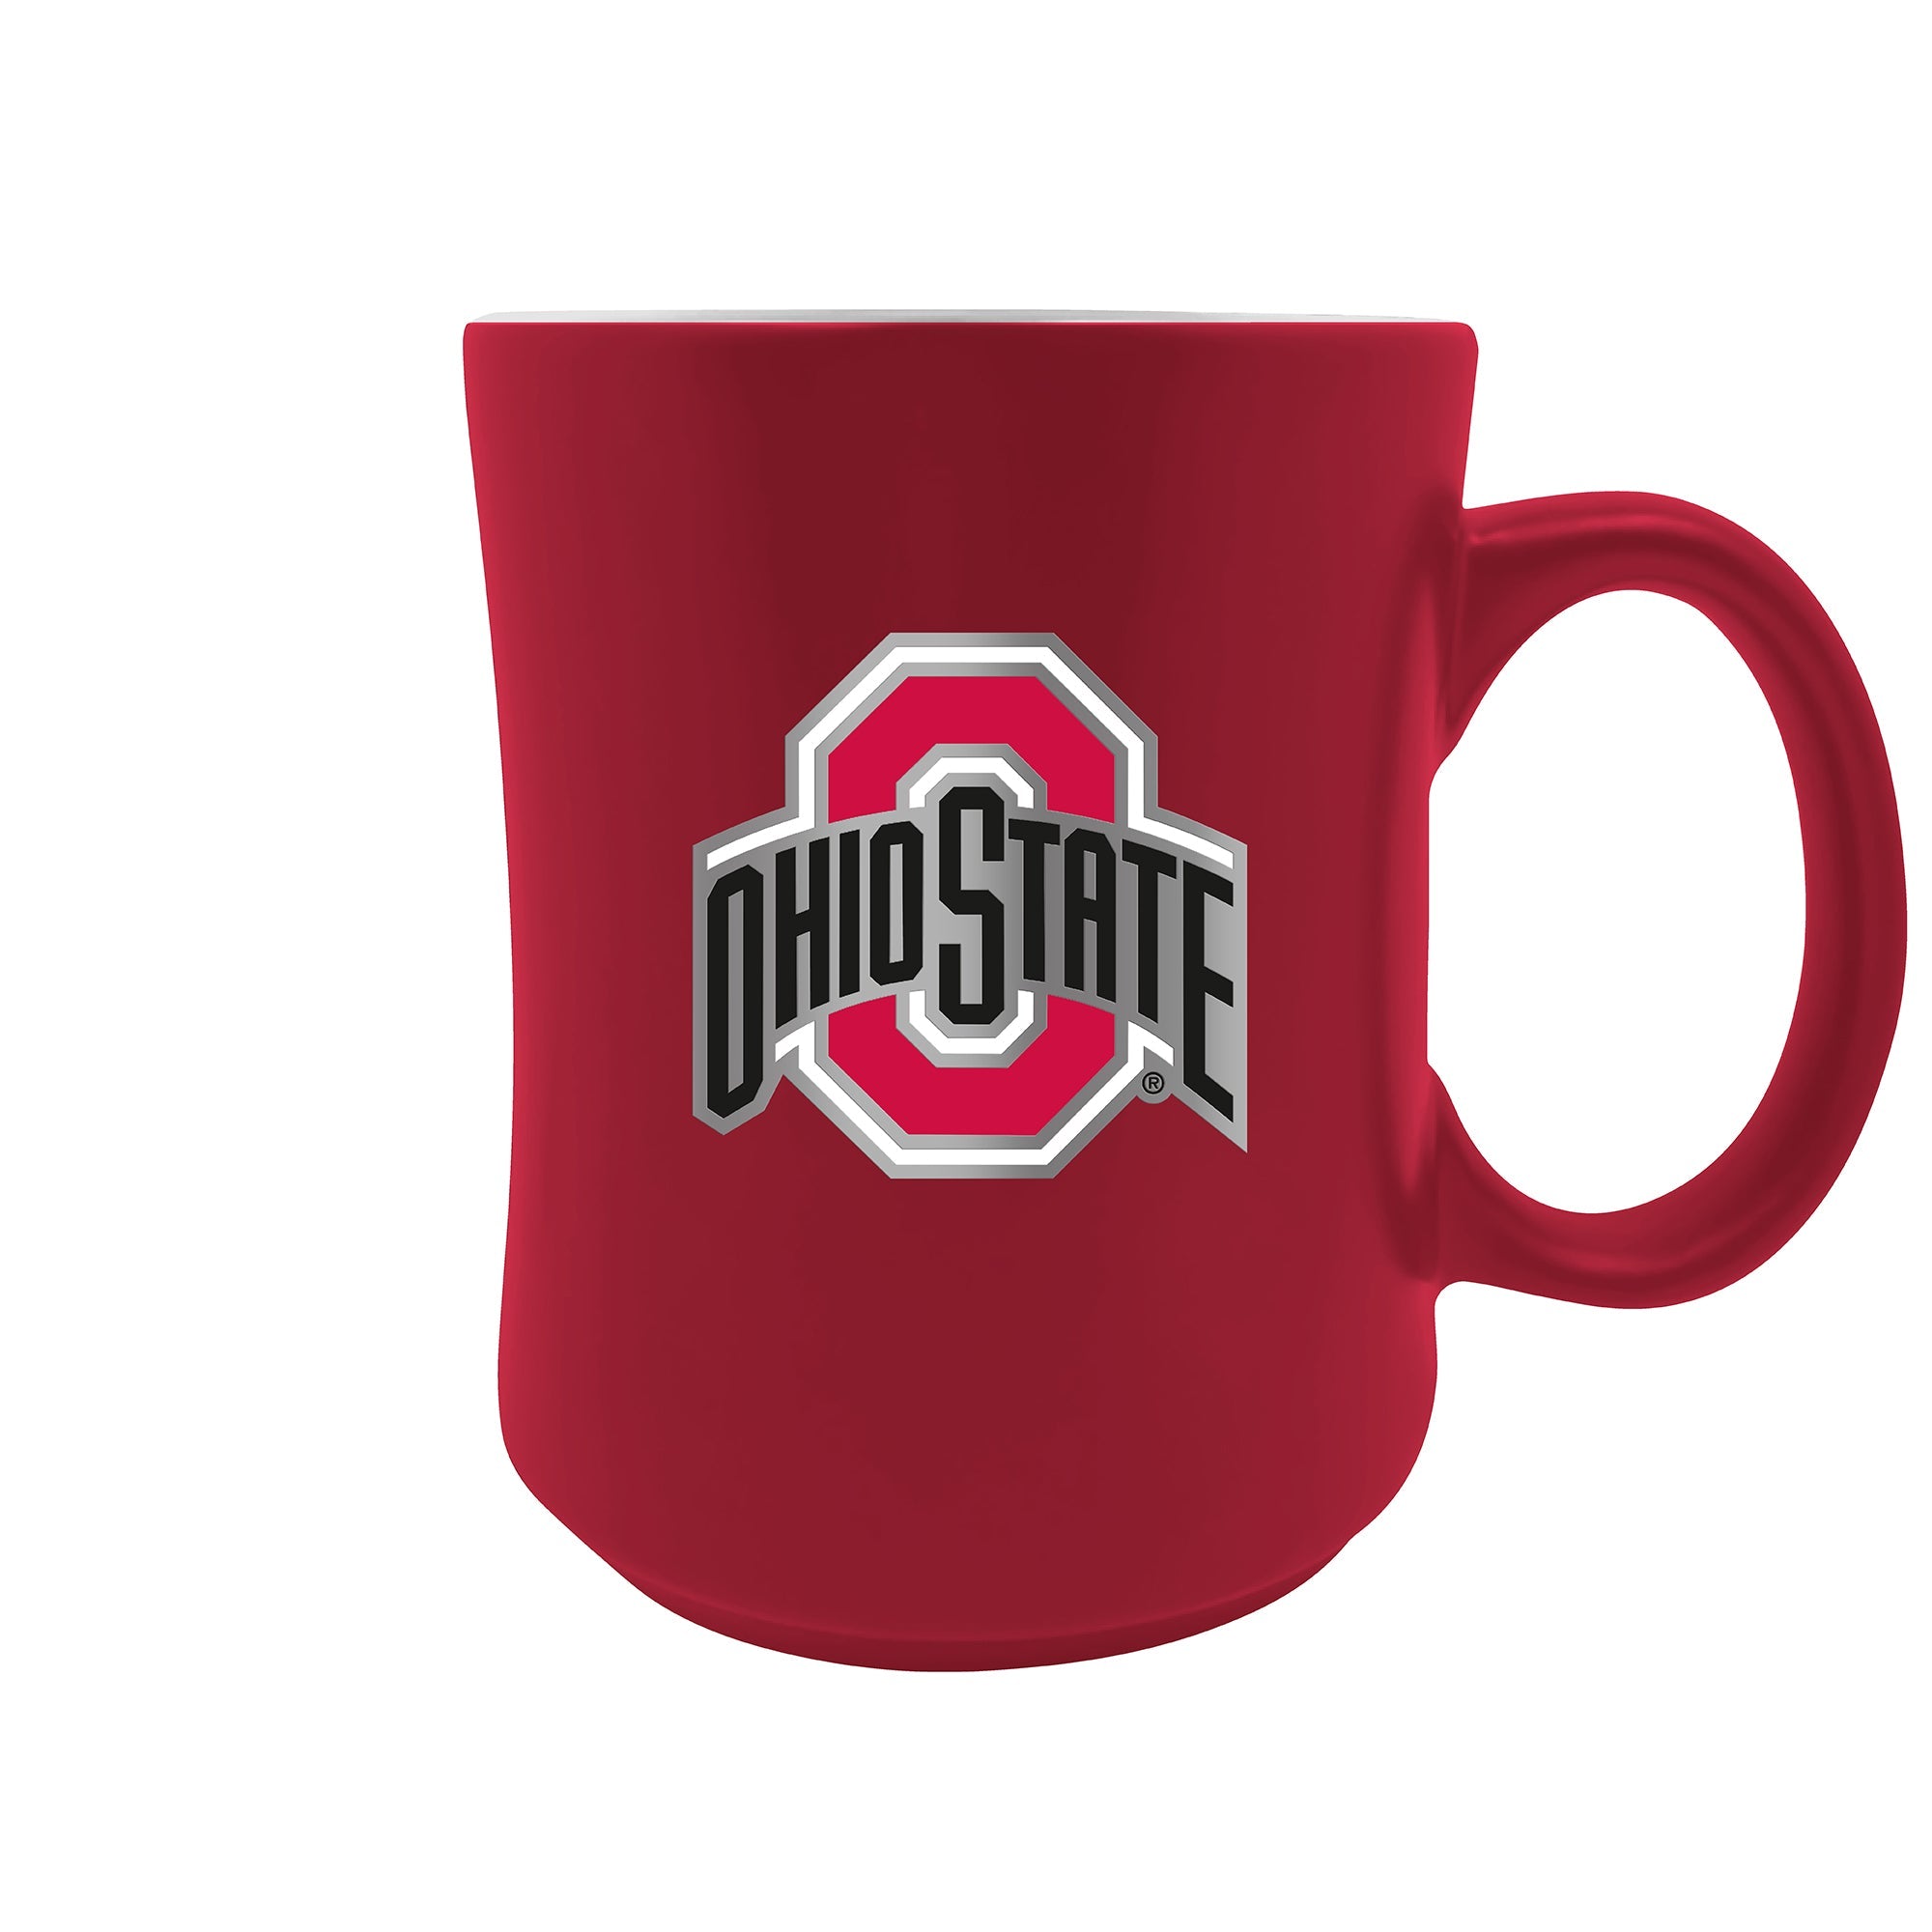 NCAA Ohio State Buckeyes 40oz Travel Mug